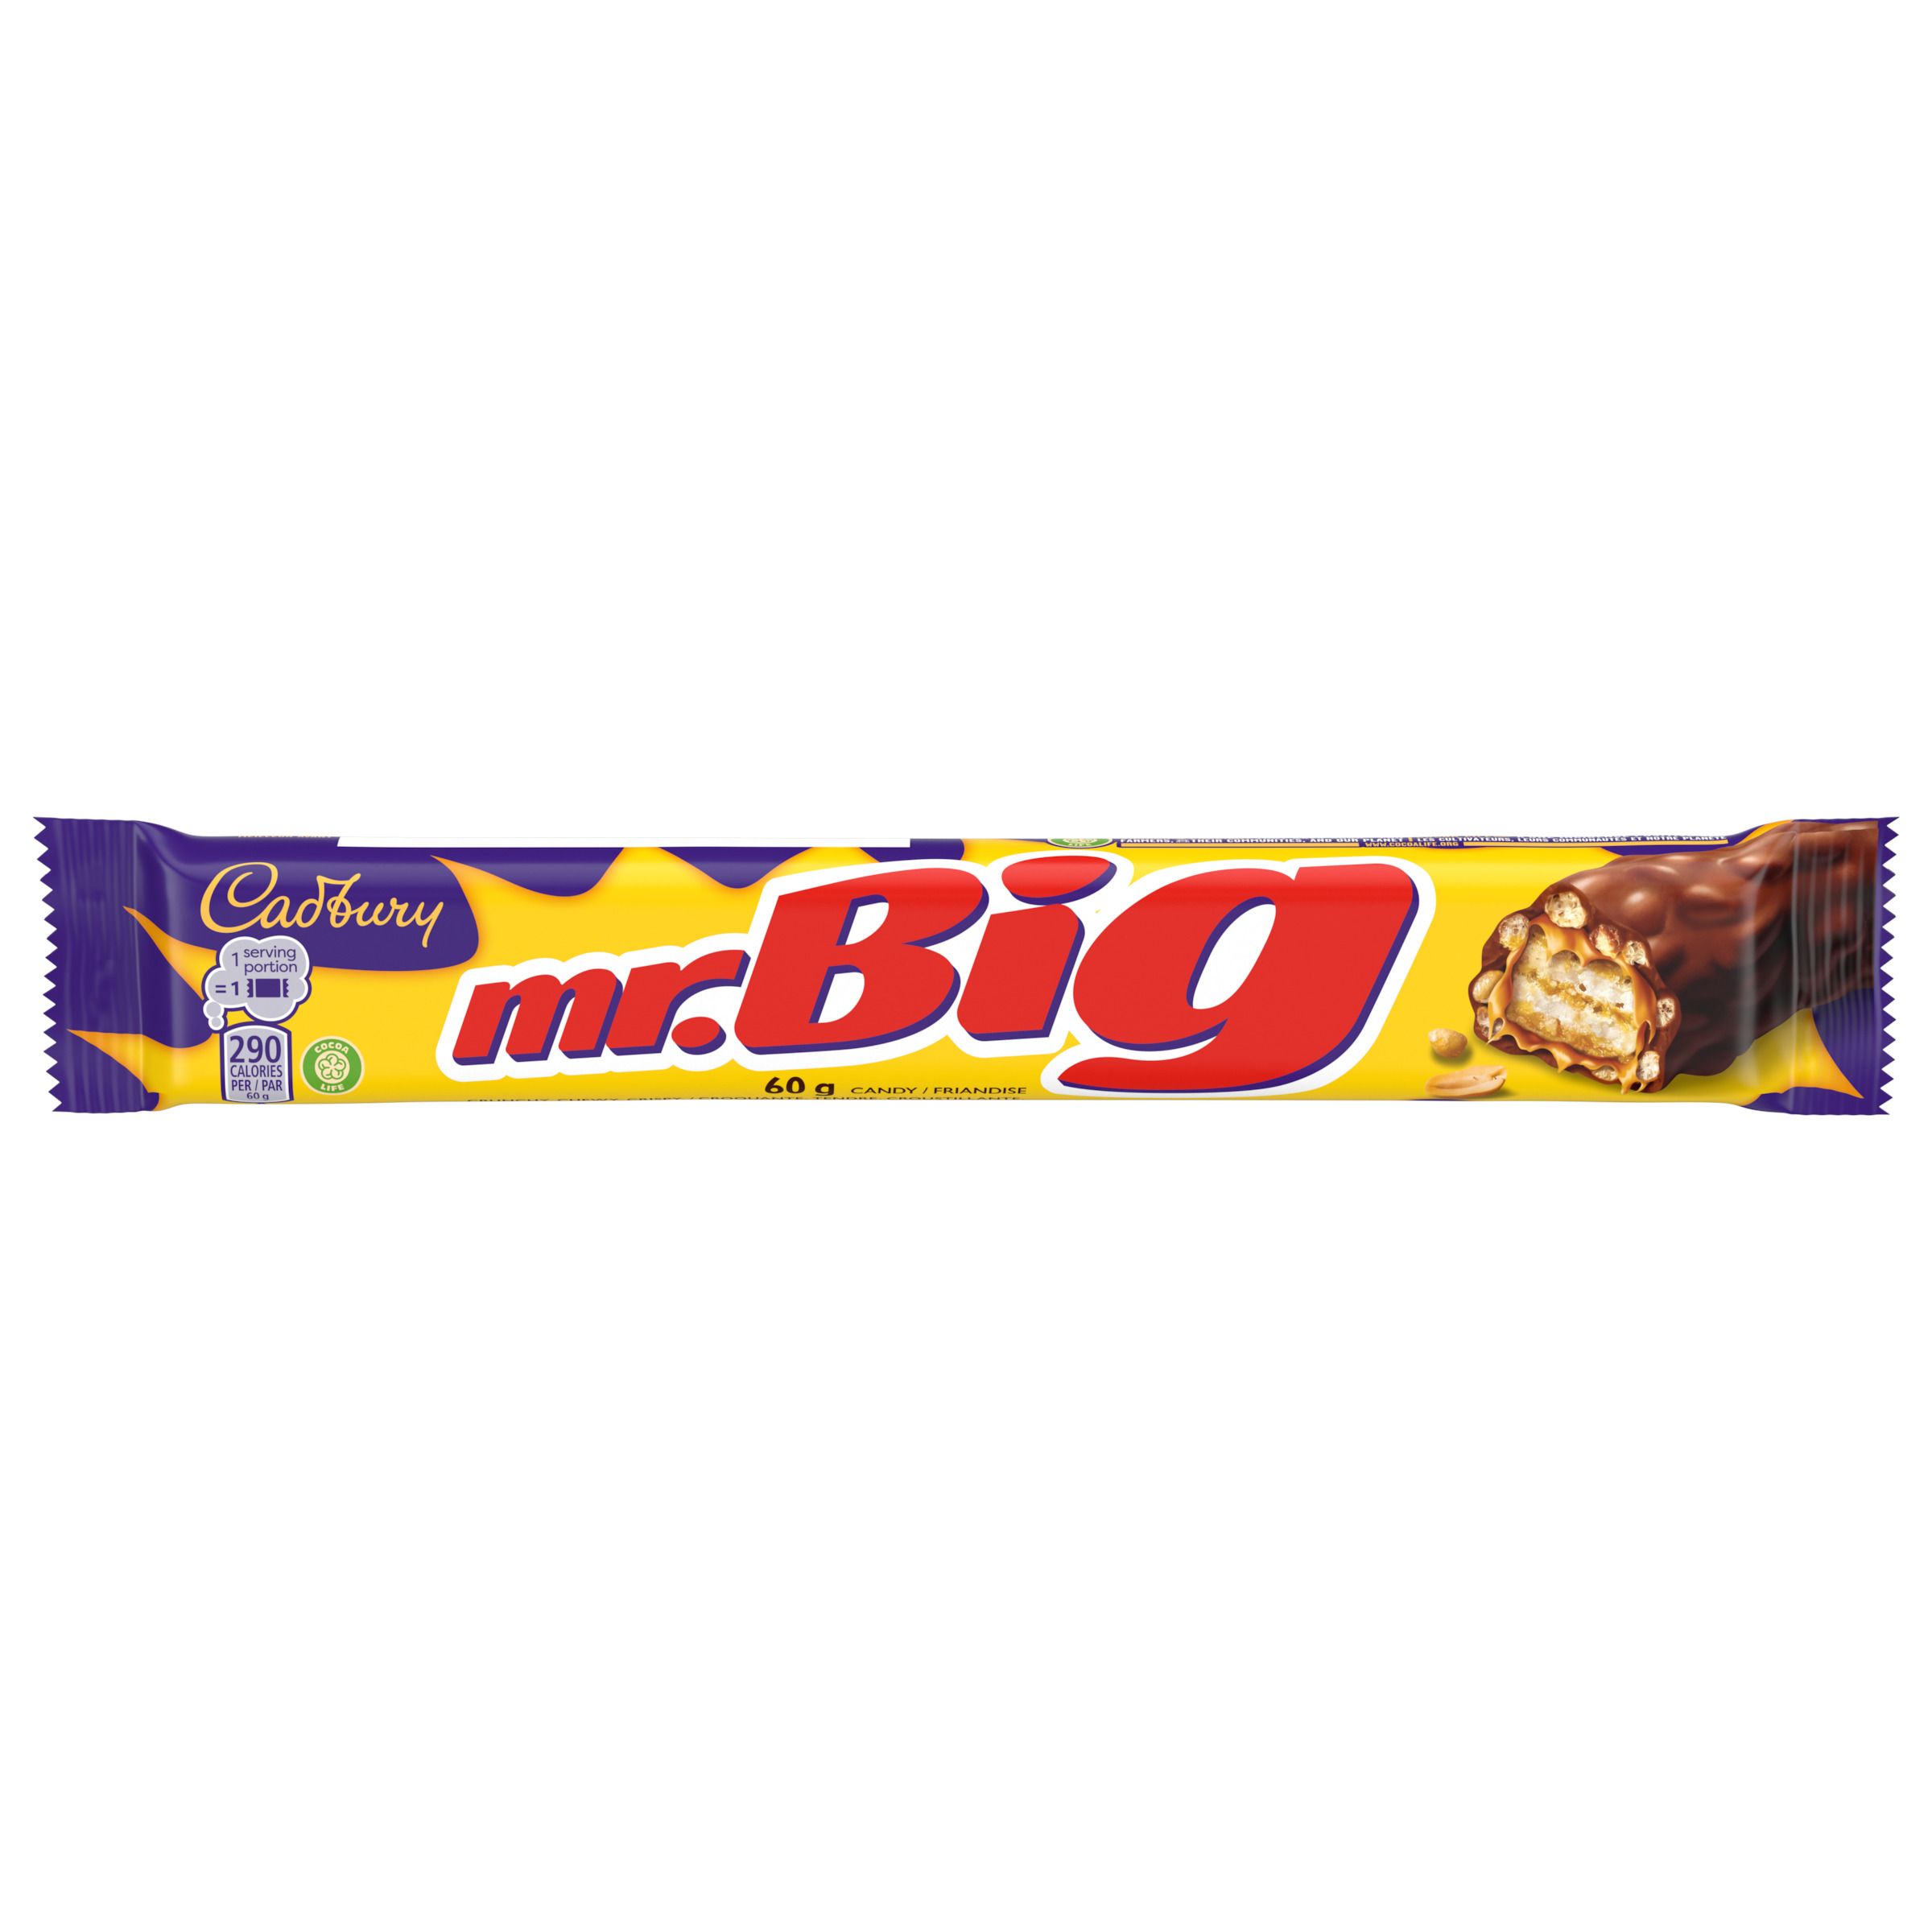 Cadbury Mr. Big Originale, 60 g-1